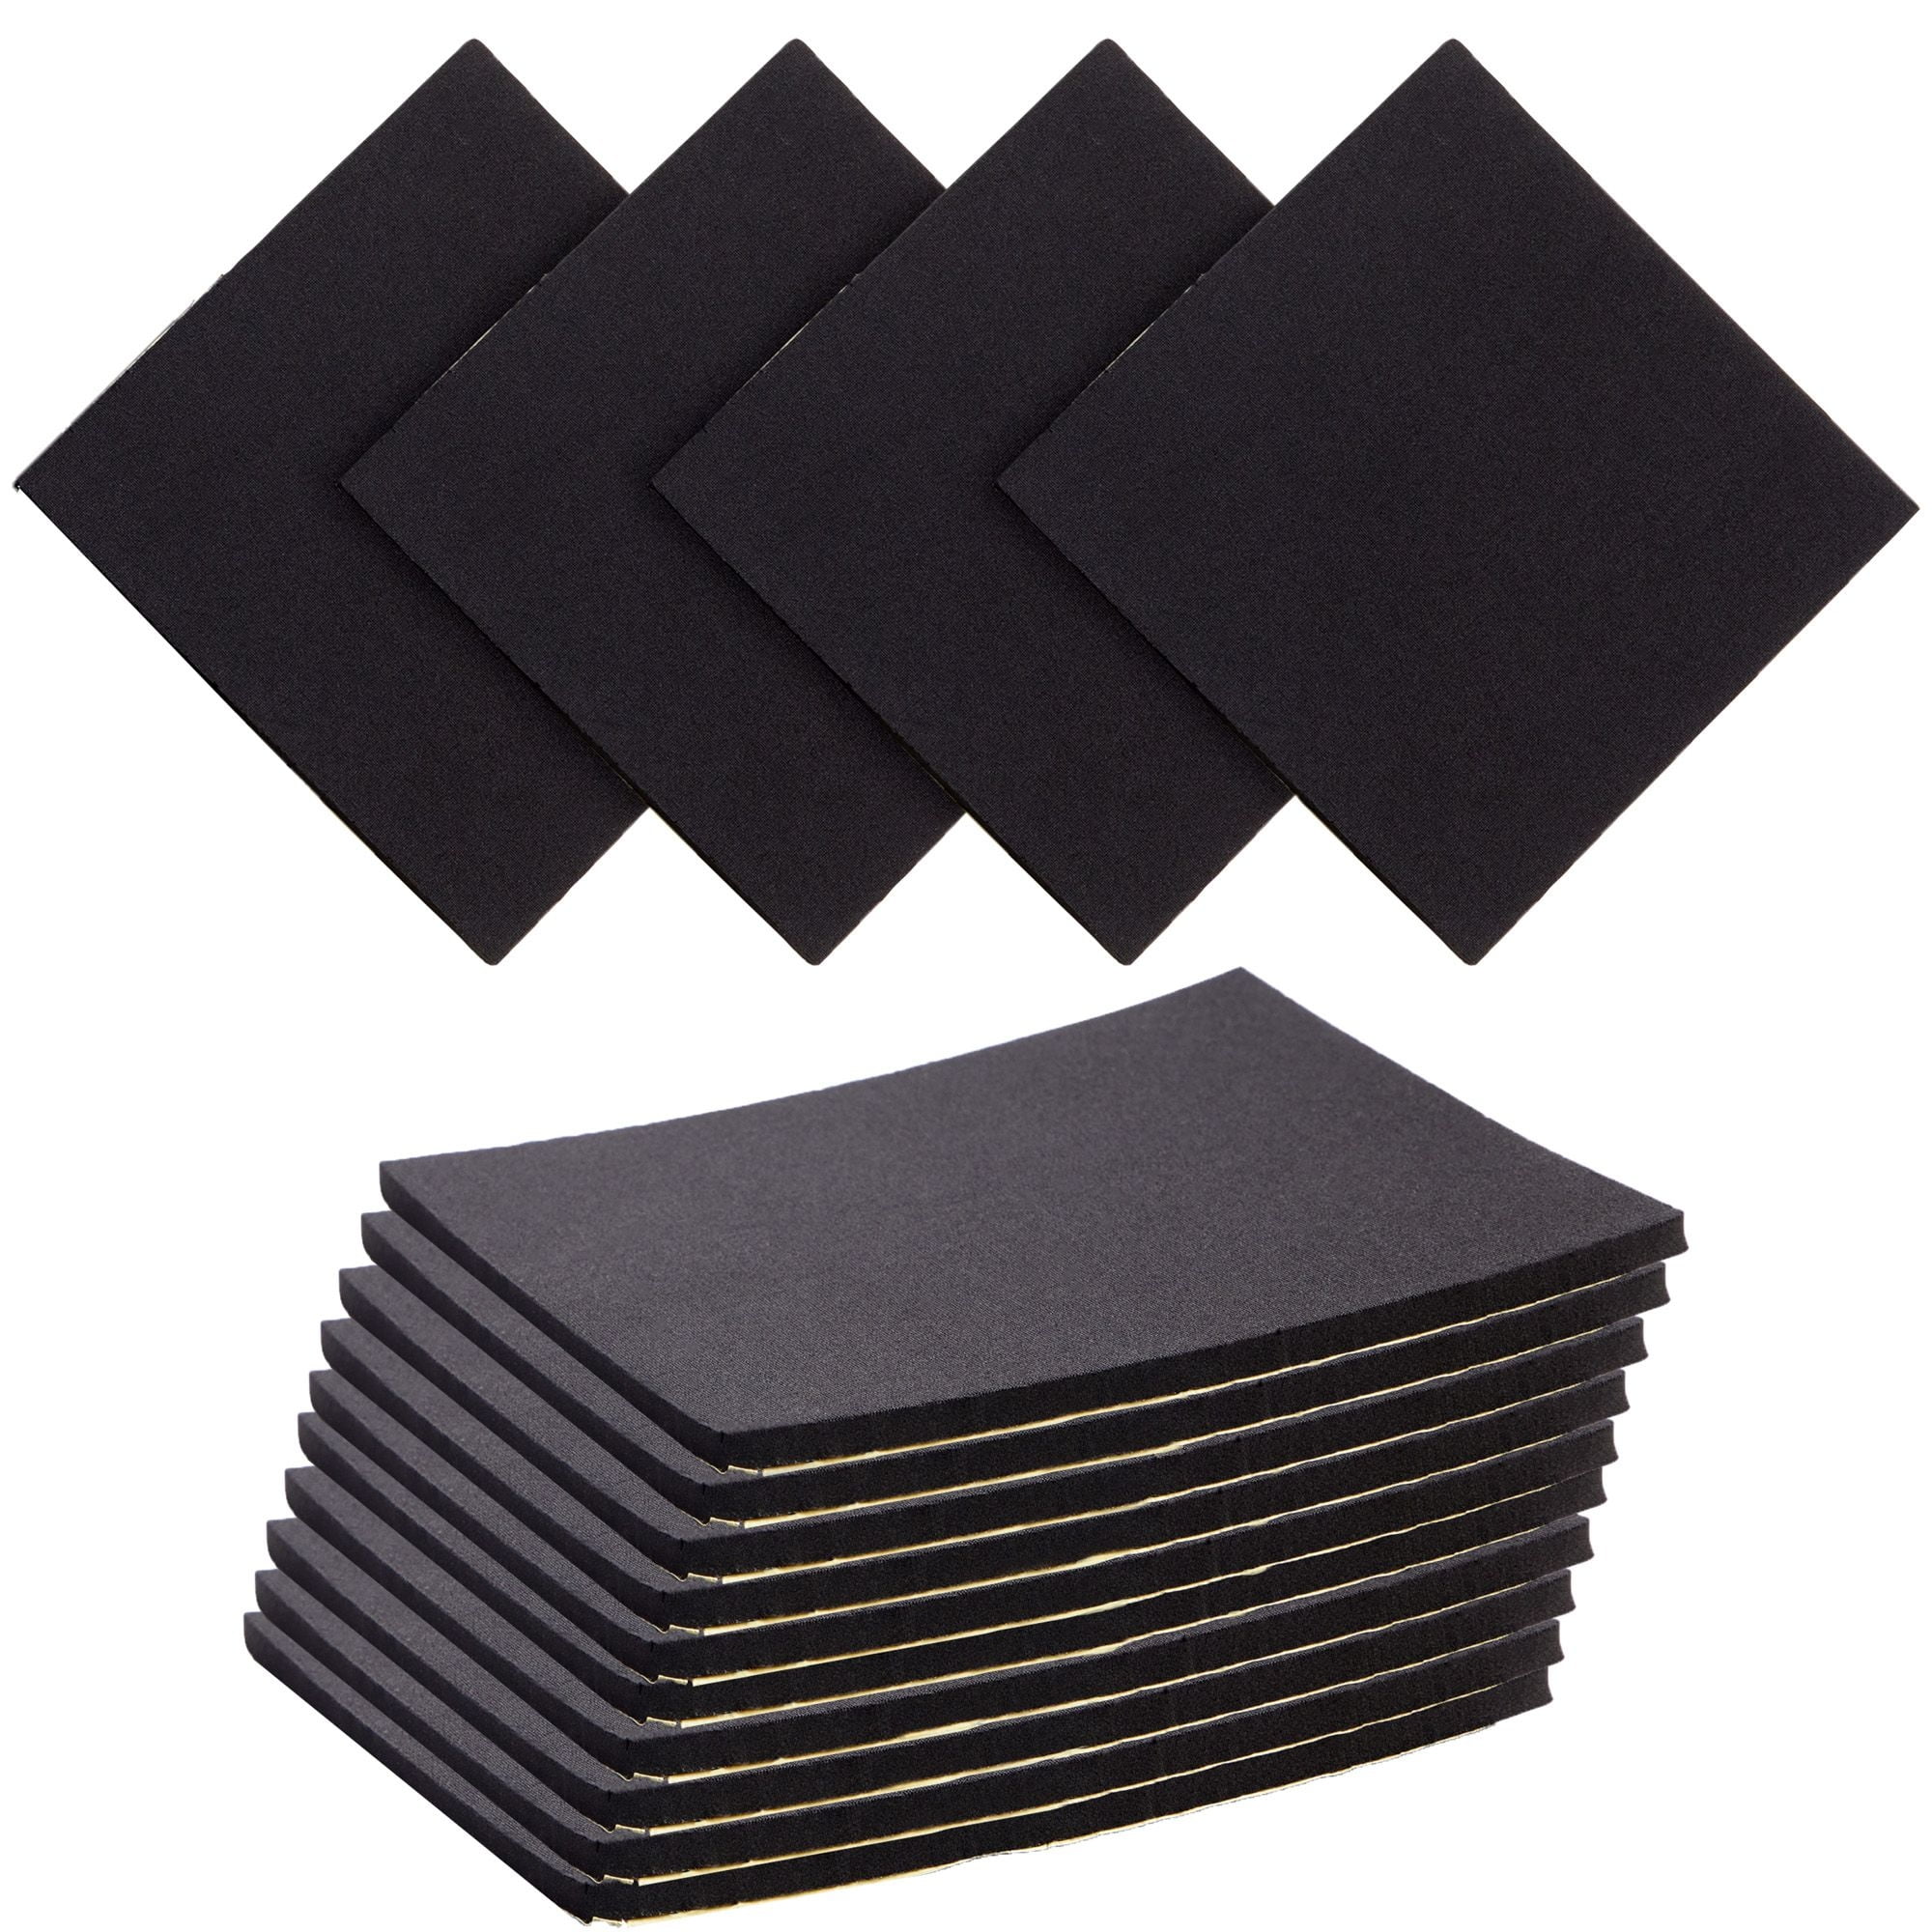 Grip pads 3 mm neoprene, set of 4 - black